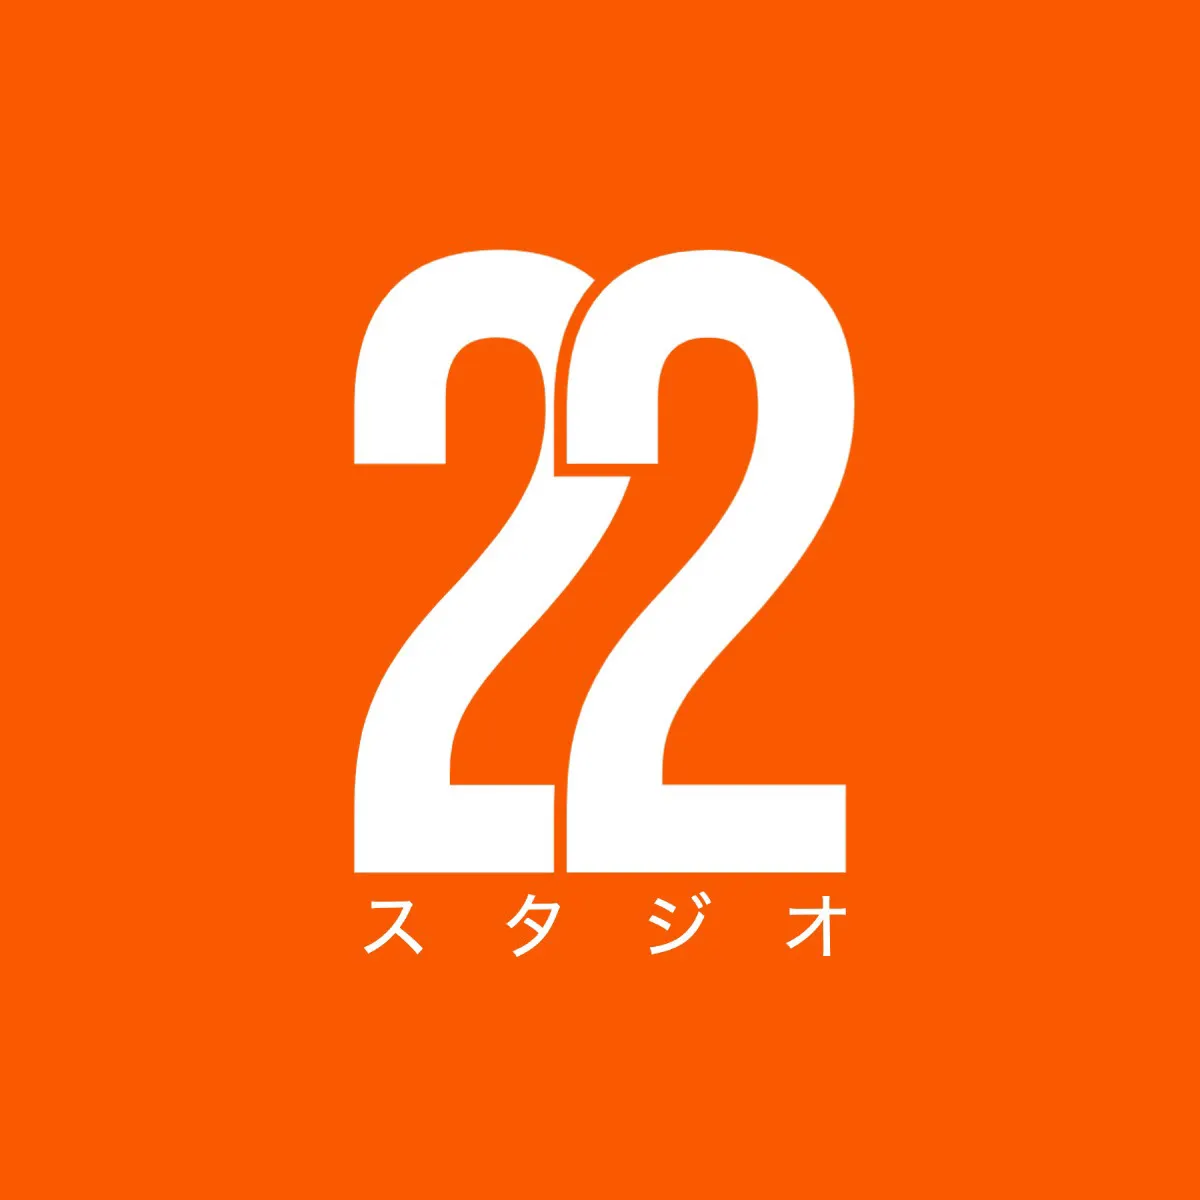 22 studio orange logo